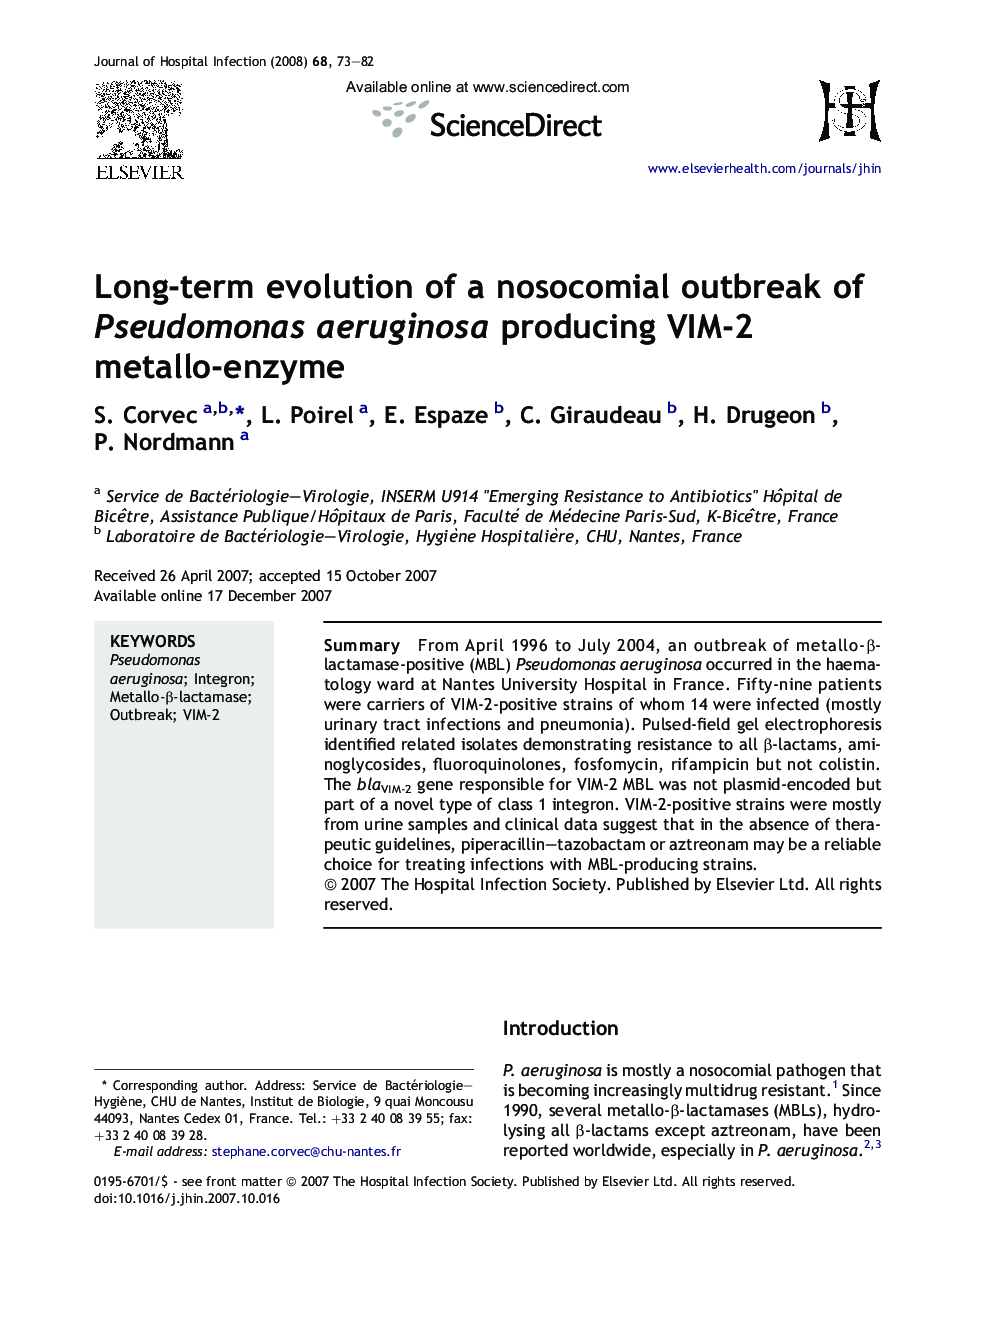 Long-term evolution of a nosocomial outbreak of Pseudomonas aeruginosa producing VIM-2 metallo-enzyme